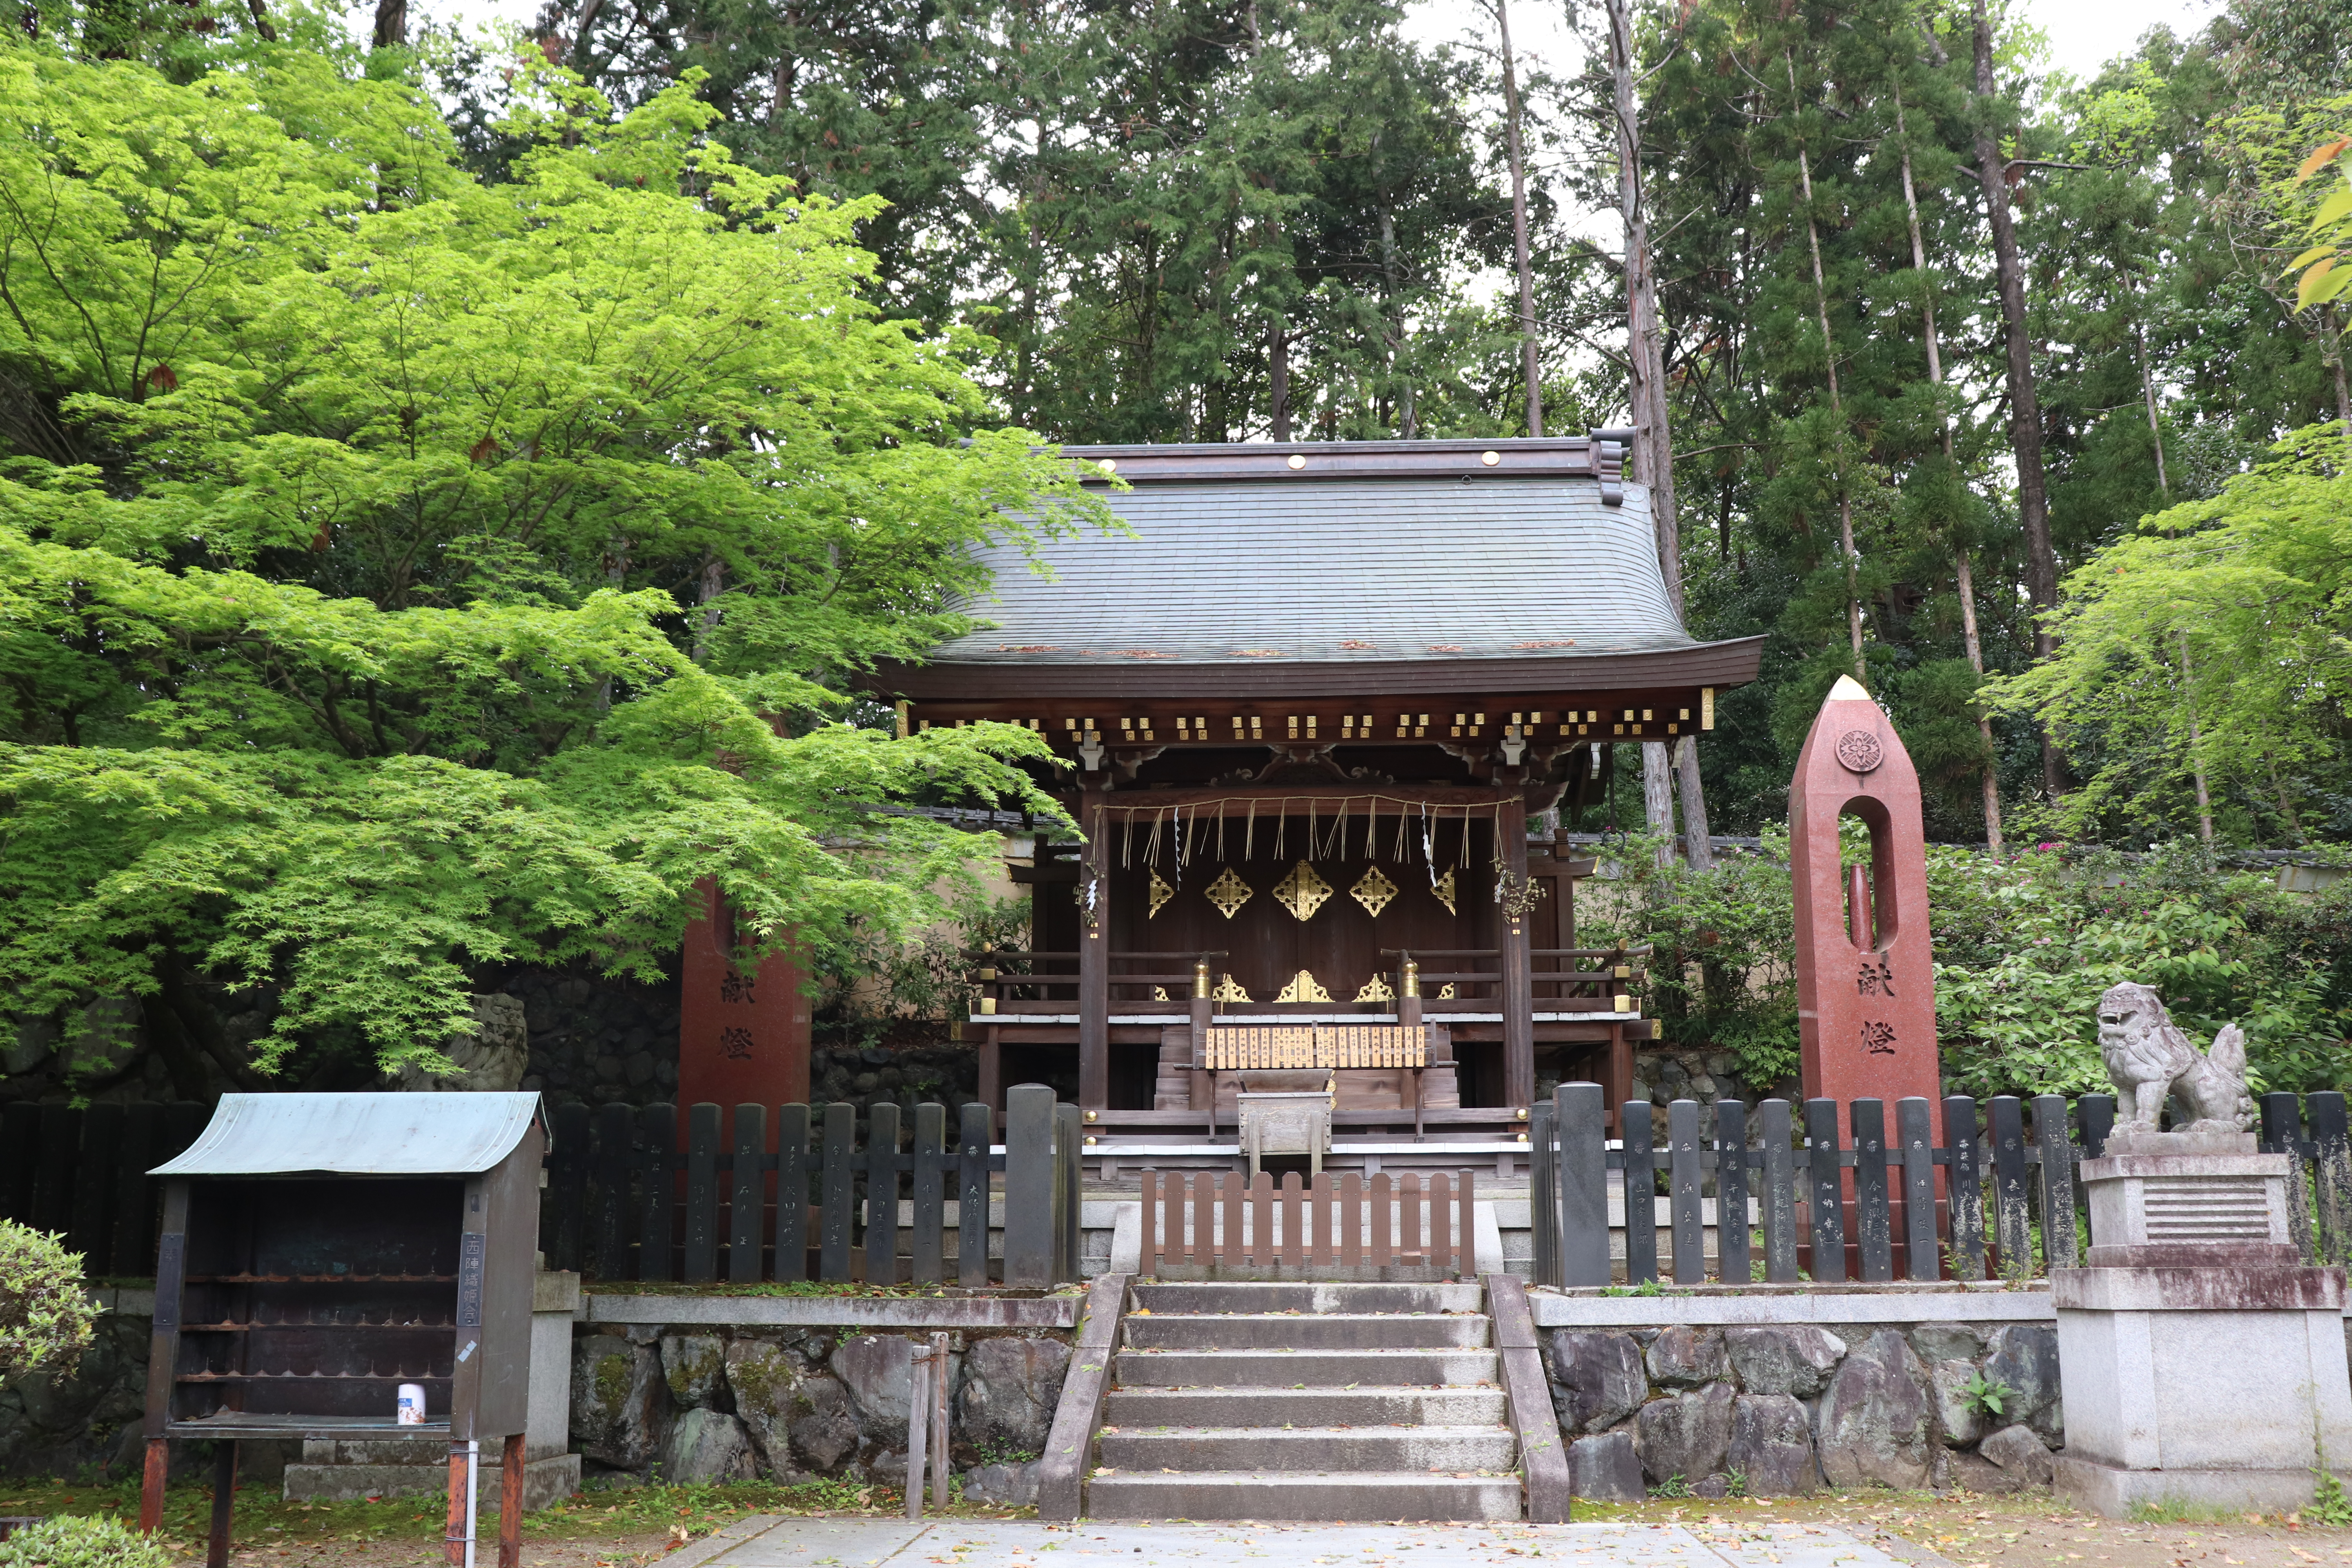 Hataori shrine in Imamiya Shrine in Kyoto